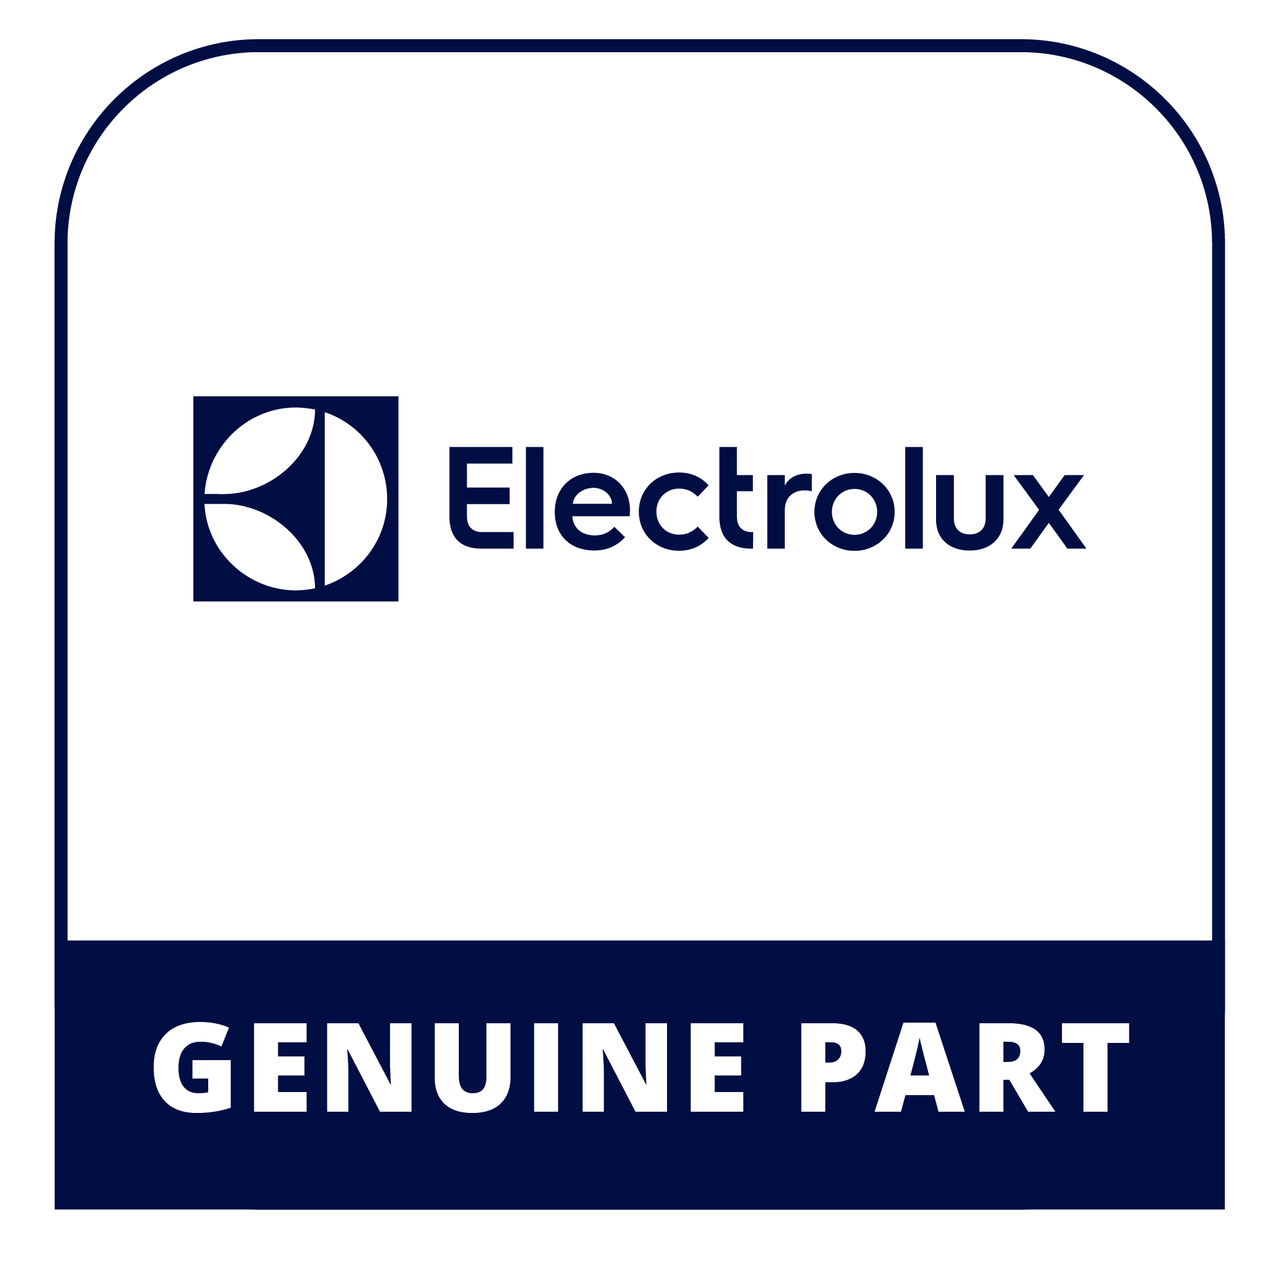 Frigidaire - Electrolux 5304495910 Sensor - Genuine Electrolux Part